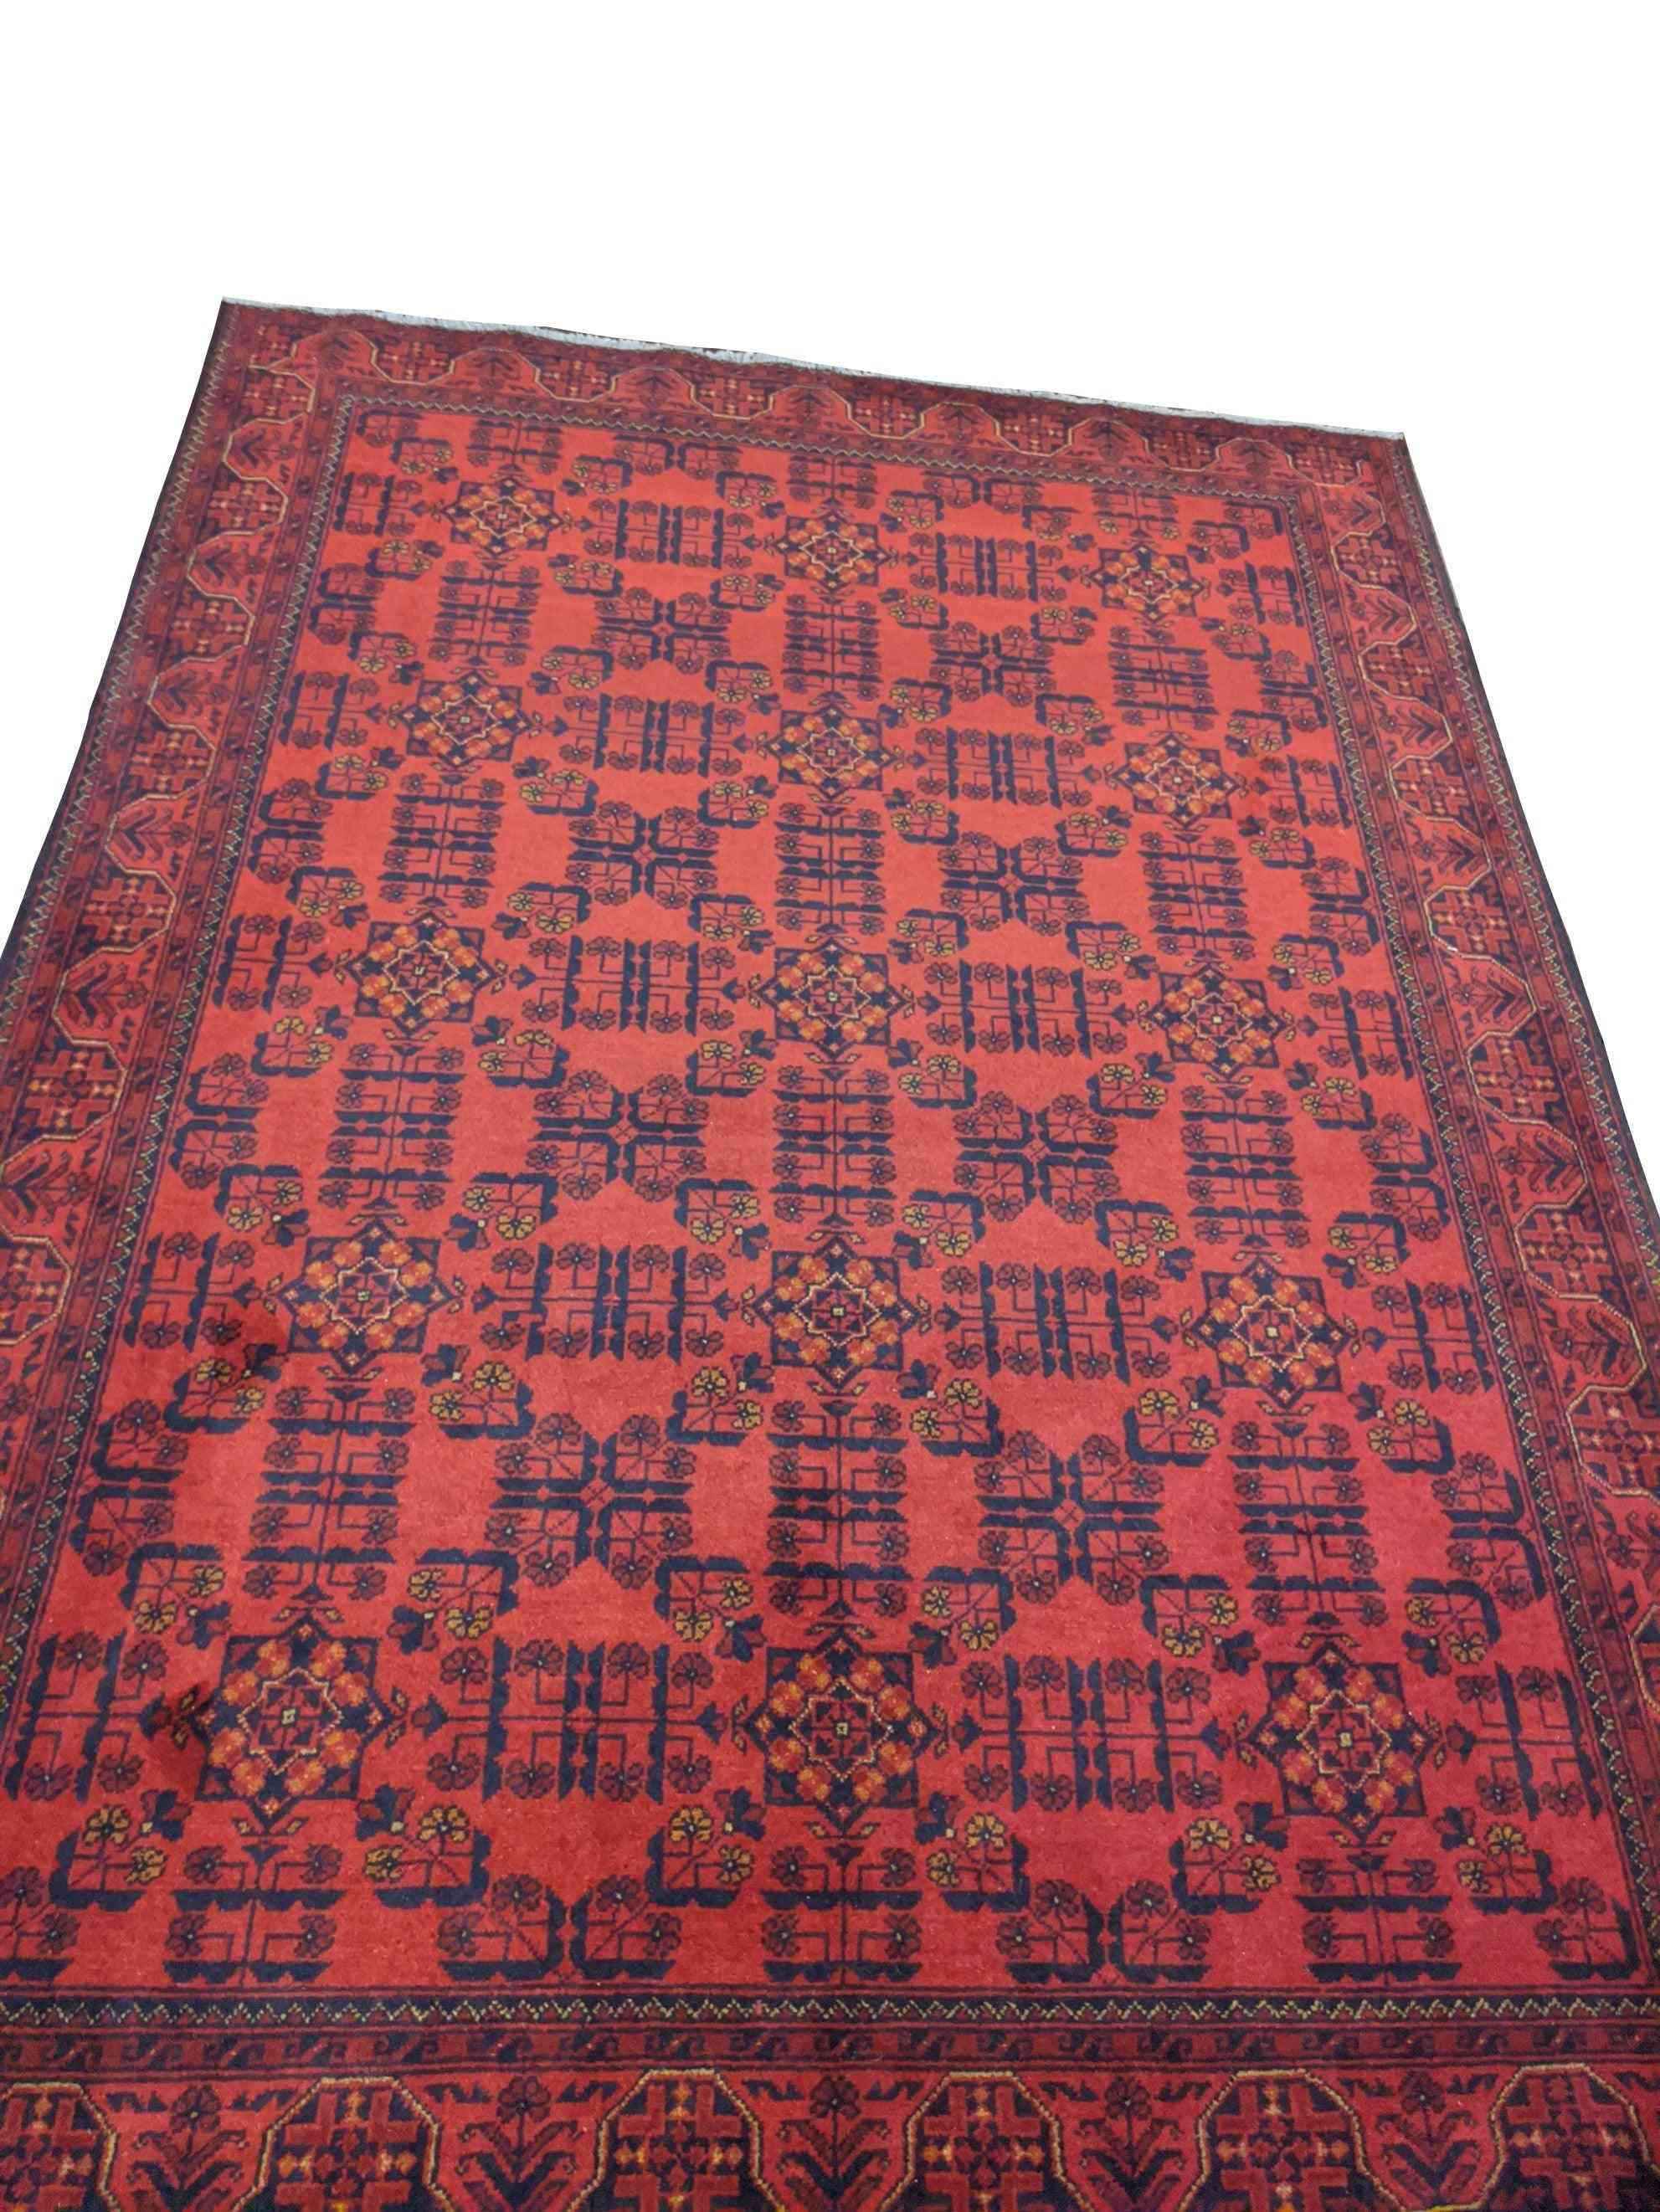 243 x 171 cm Afghan Khan Tribal Red Rug - Rugmaster